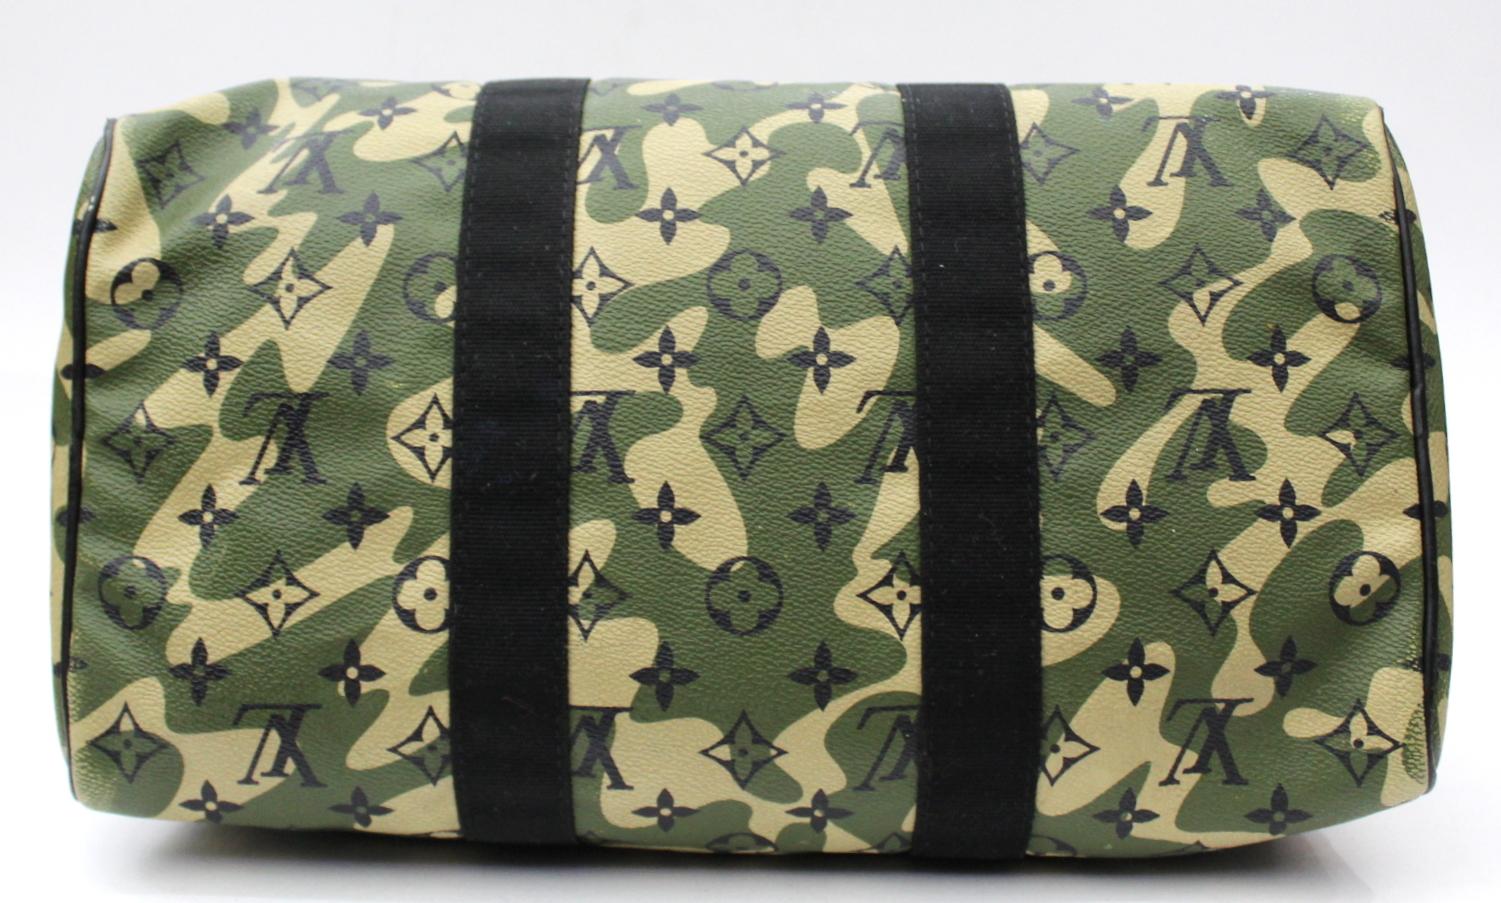 Black Louis Vuitton Limited Edition Monogramouflage Canvas Speedy 35 Bag